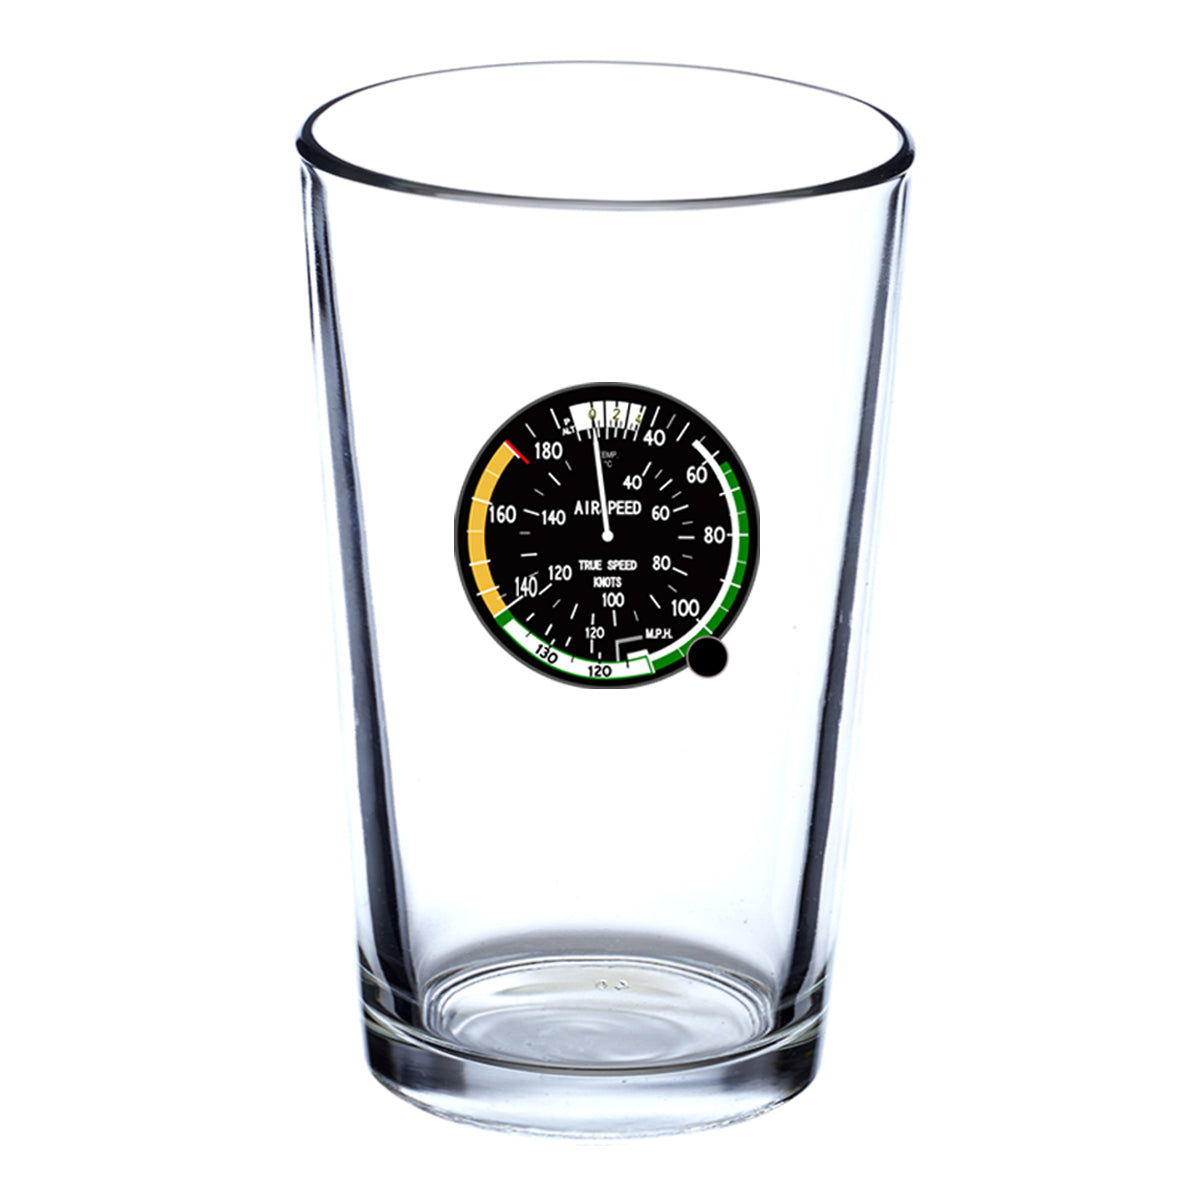 Airspeed Indicator Designed Beer & Water Glasses